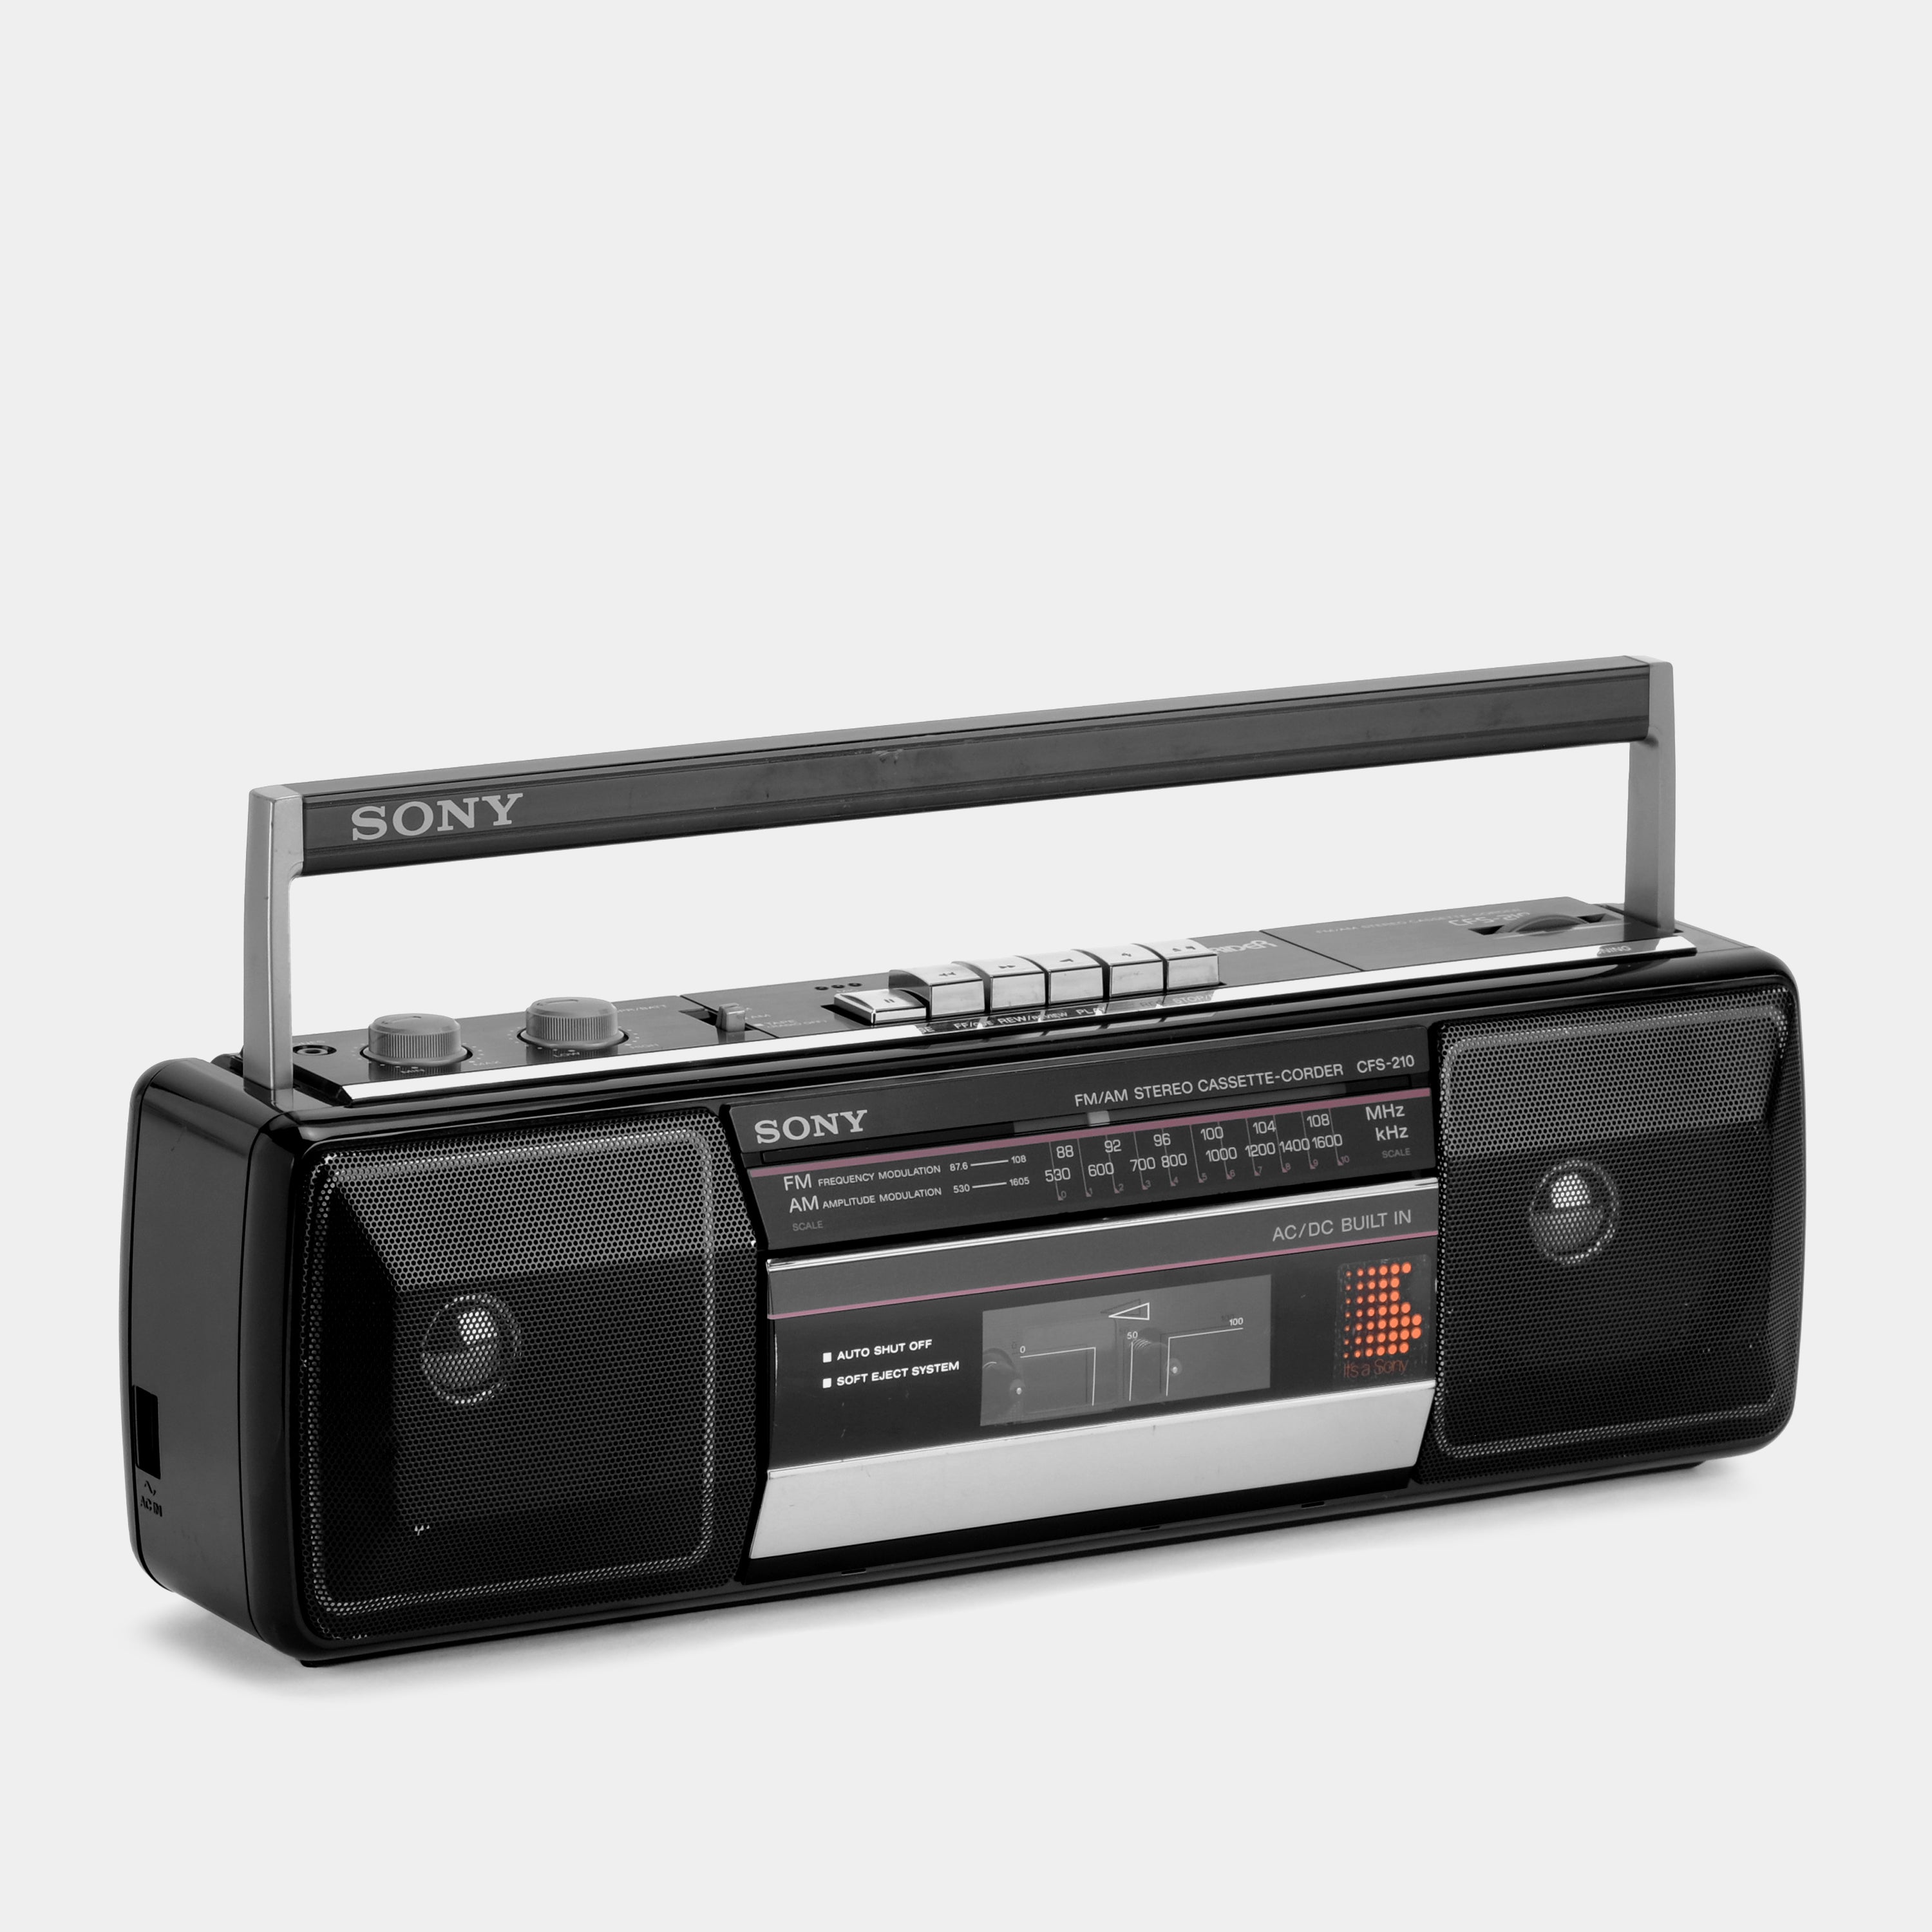 Sony Sound Rider CFS-210 FM/AM Stereo Cassette-Corder Boombox